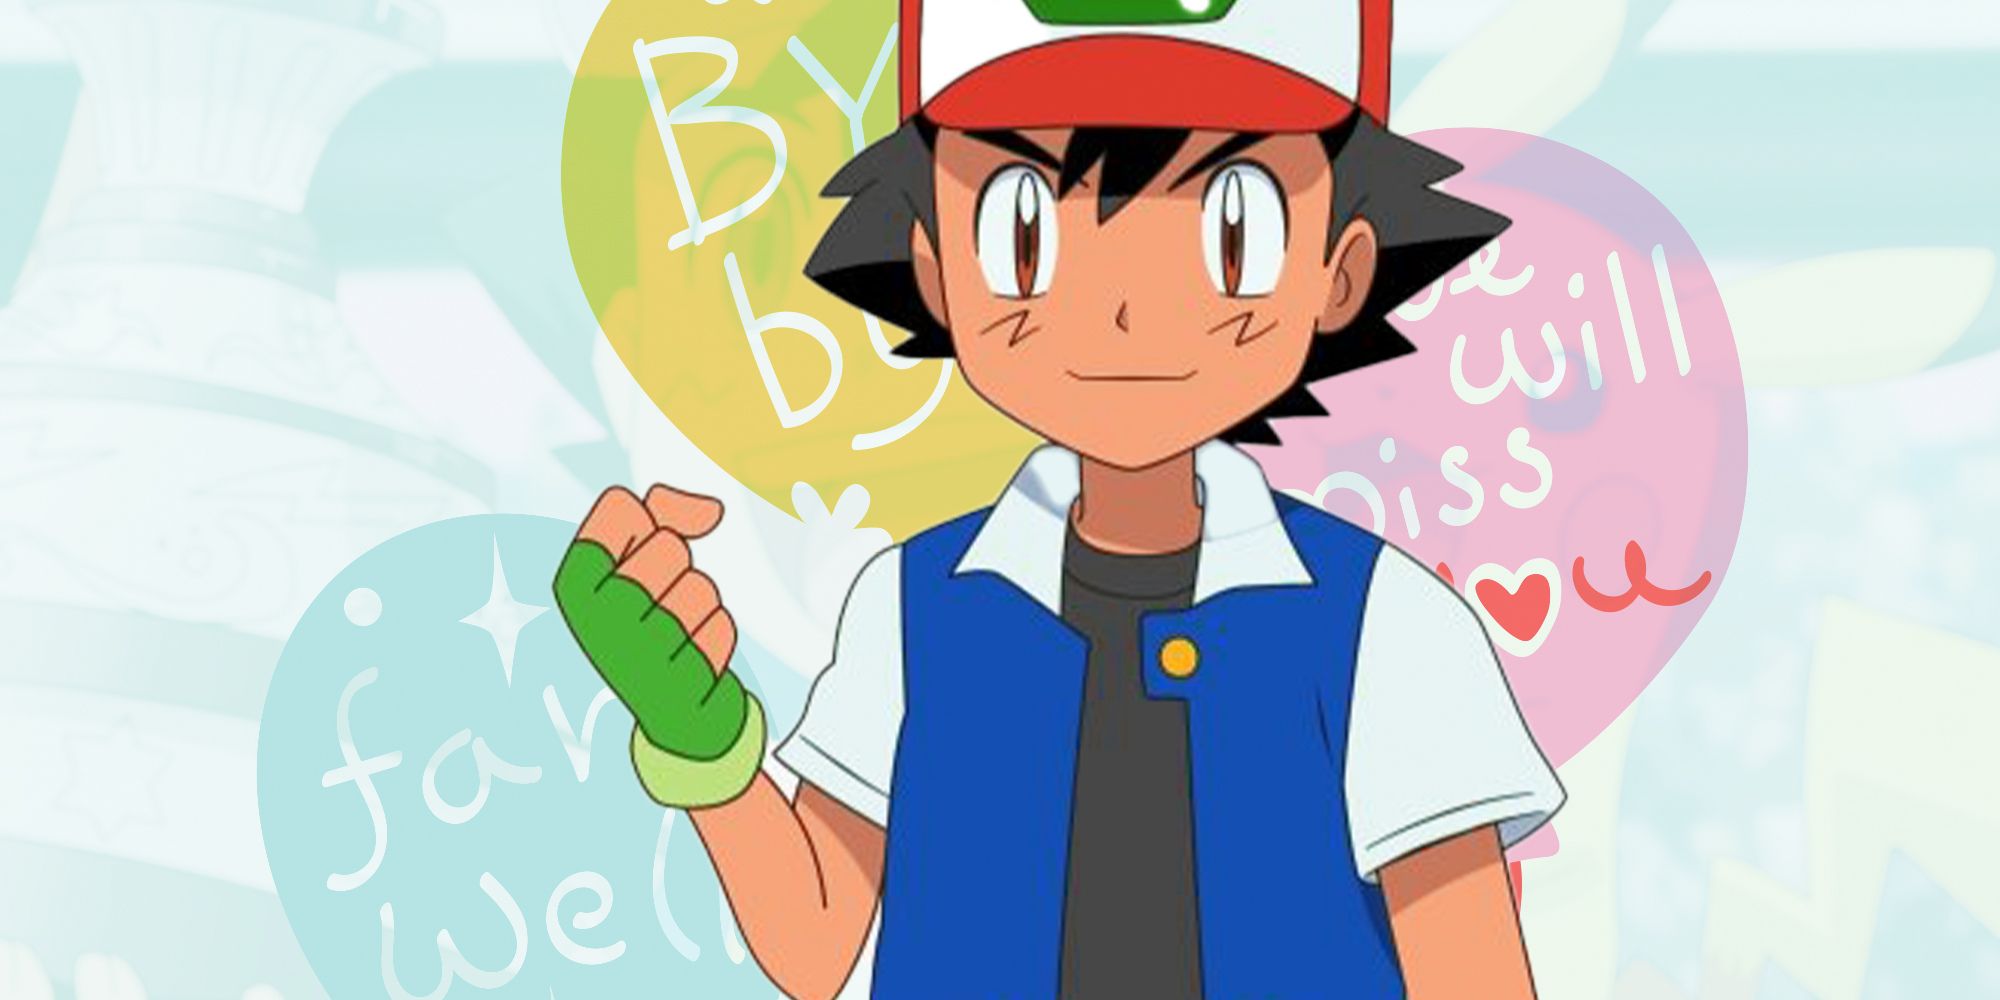 Pokémon's Ash Ketchum, Pikachu leaving series for new characters